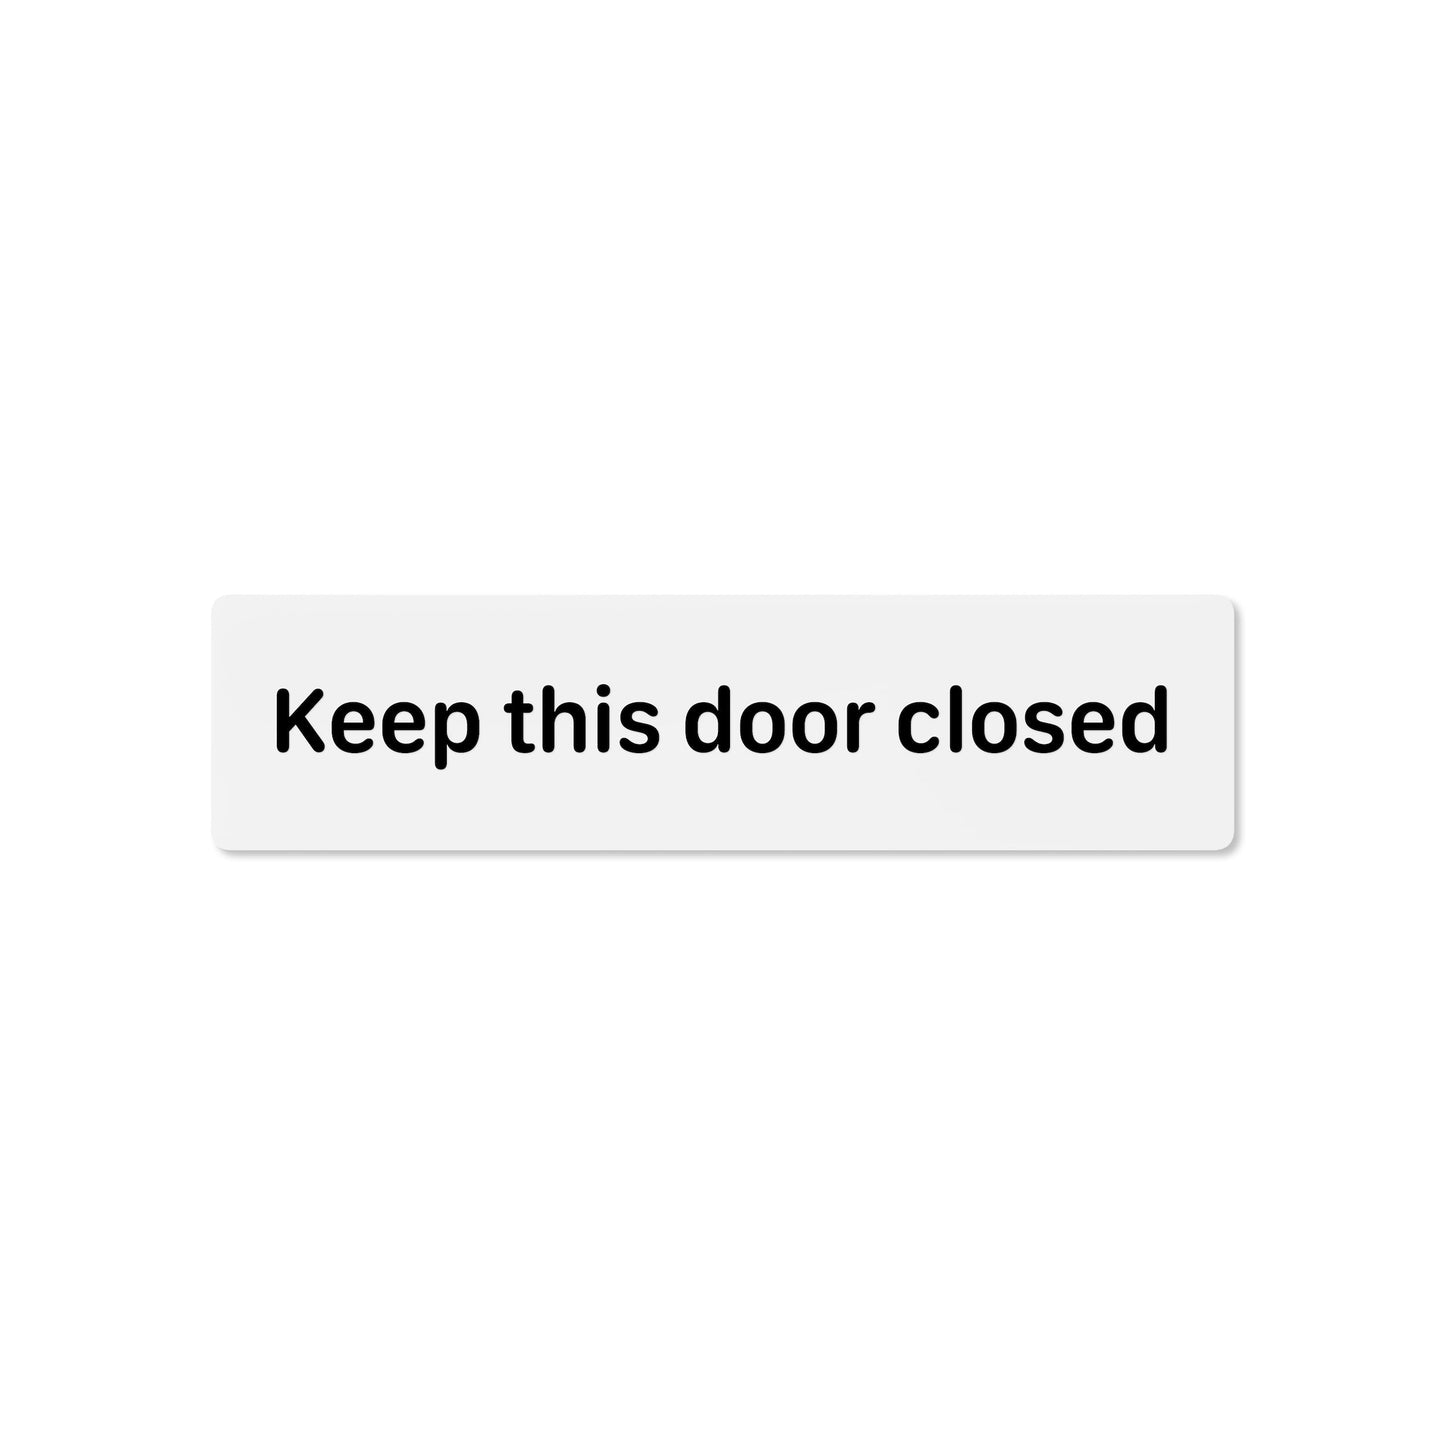 Keep this door closed